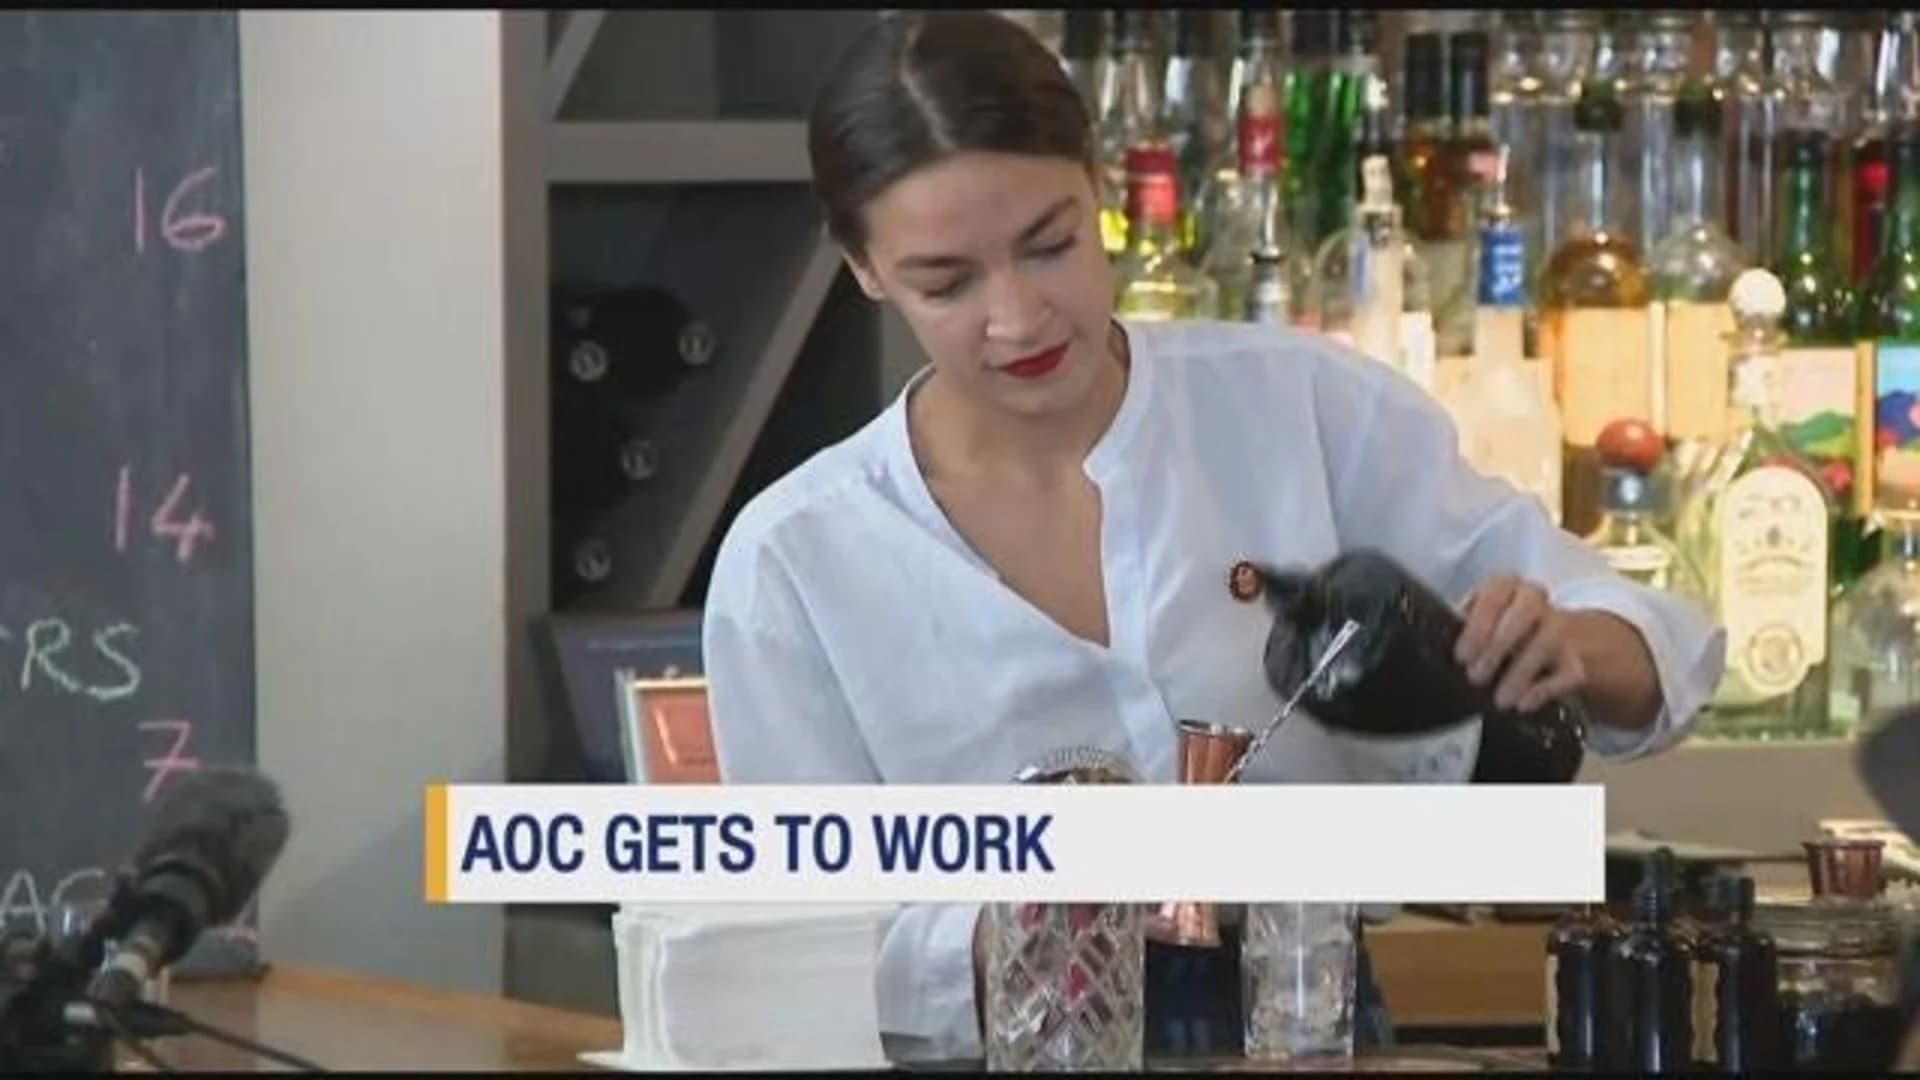 Ocasio-Cortez serves up food, drinks in support of raising minimum wage